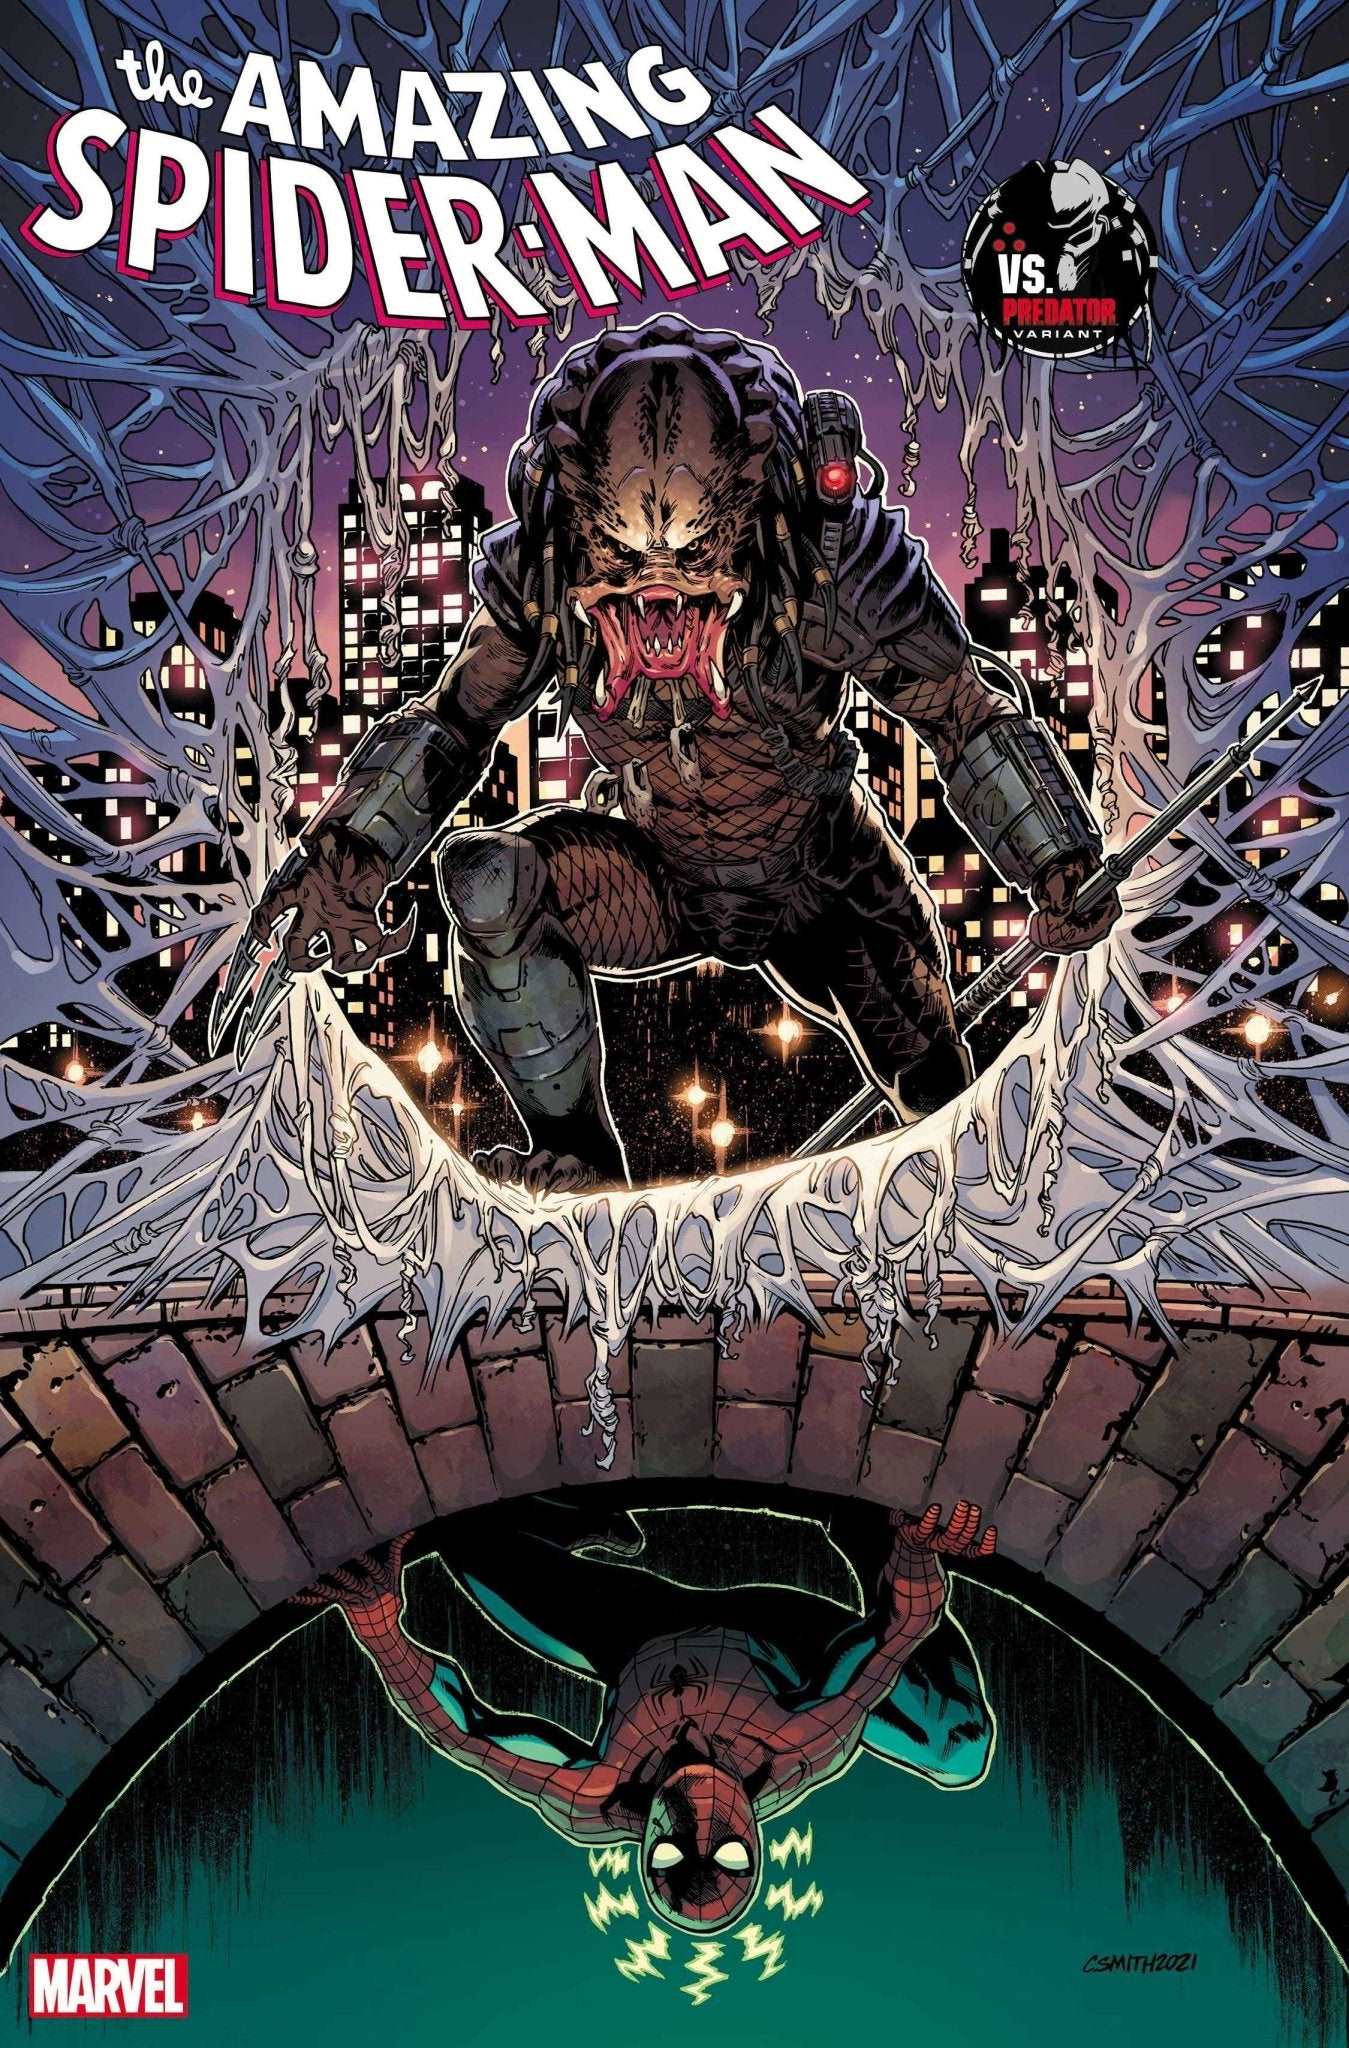 AMAZING SPIDER-MAN #7 - The Comic Construct